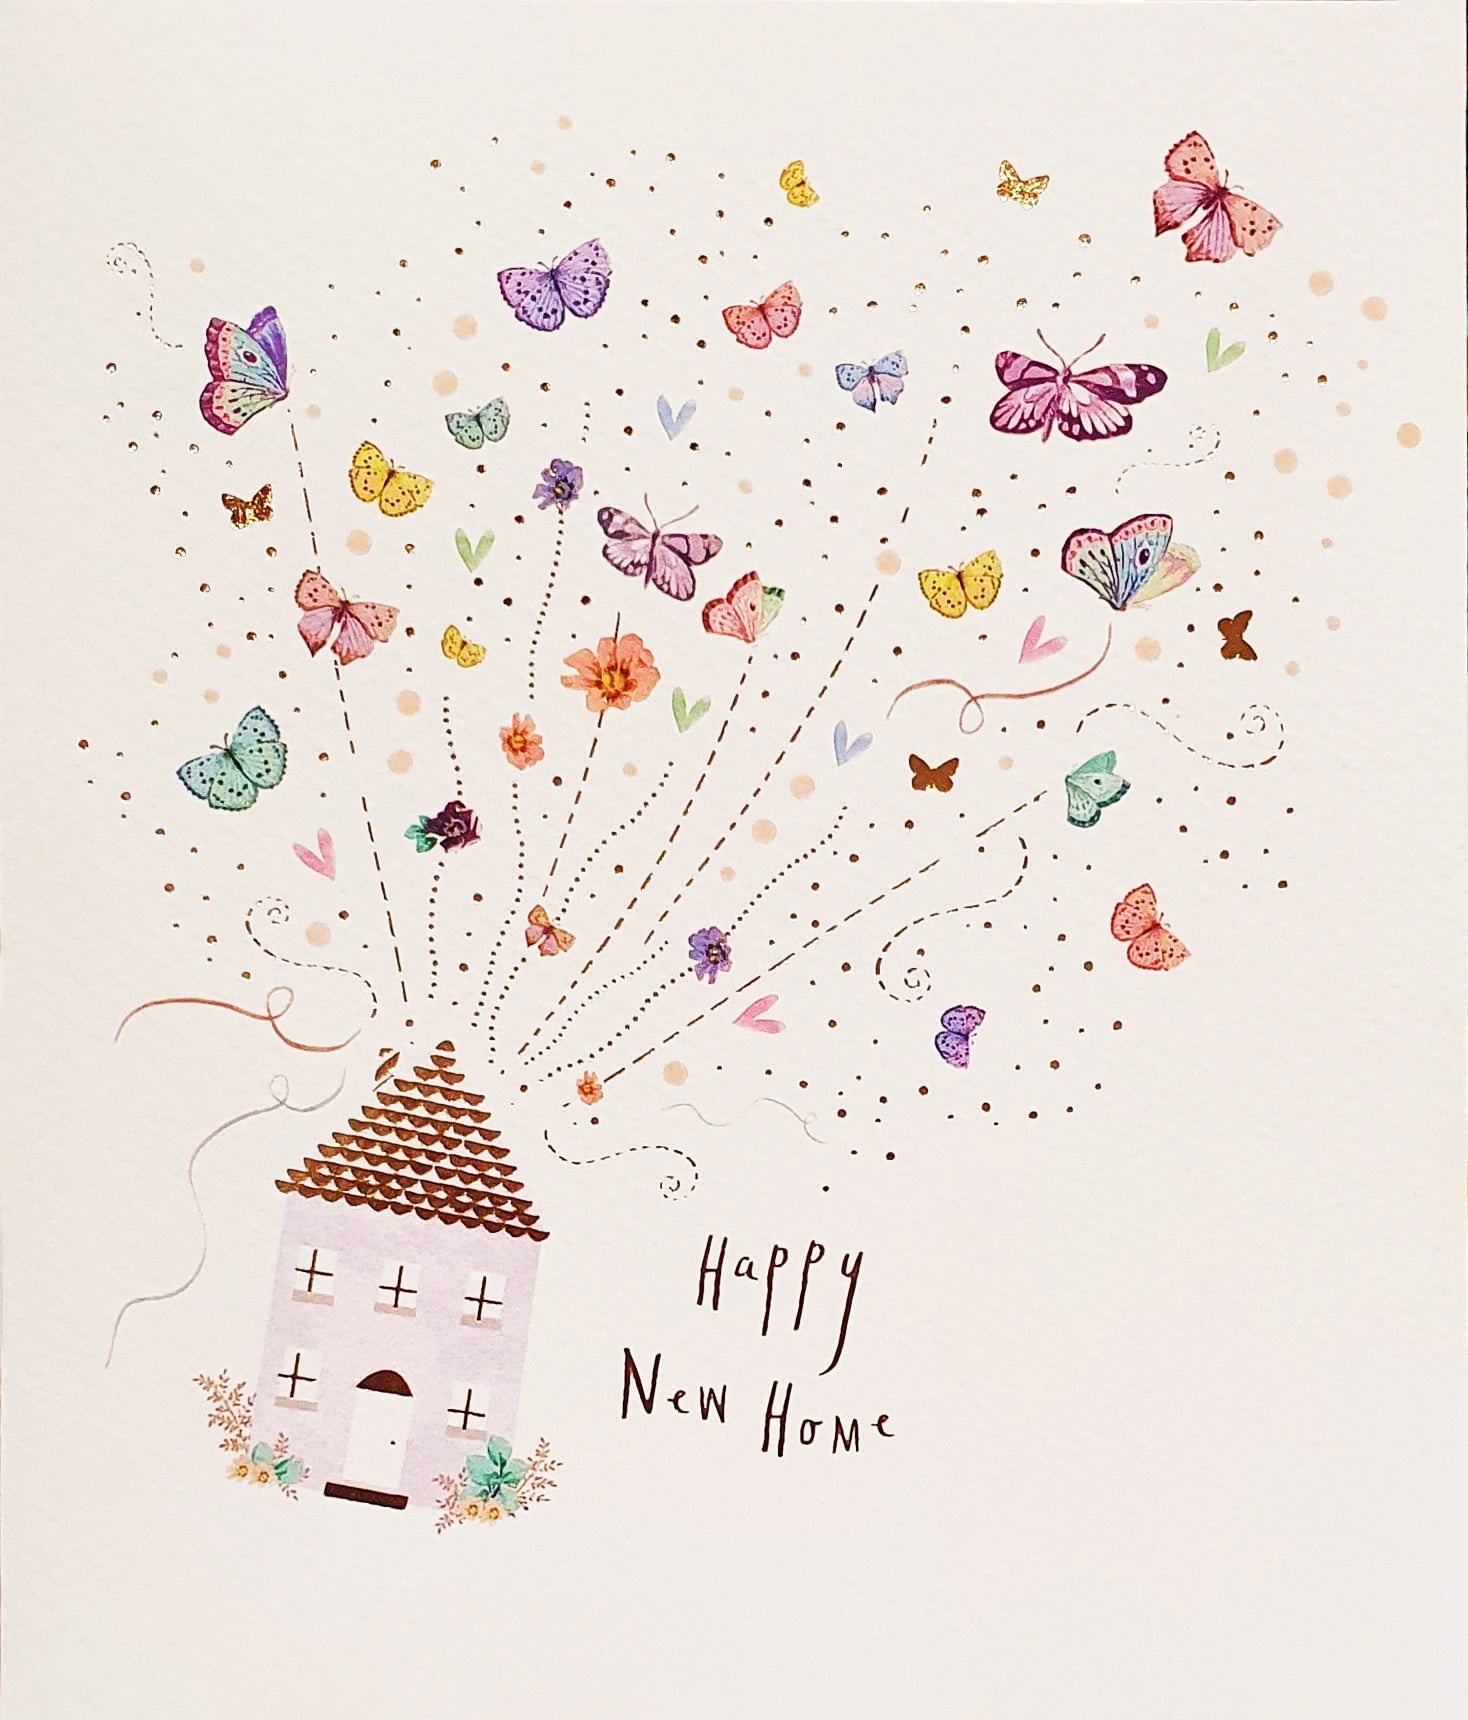 New Home Card - A Kaleidoscope Of Colourful Butterflies